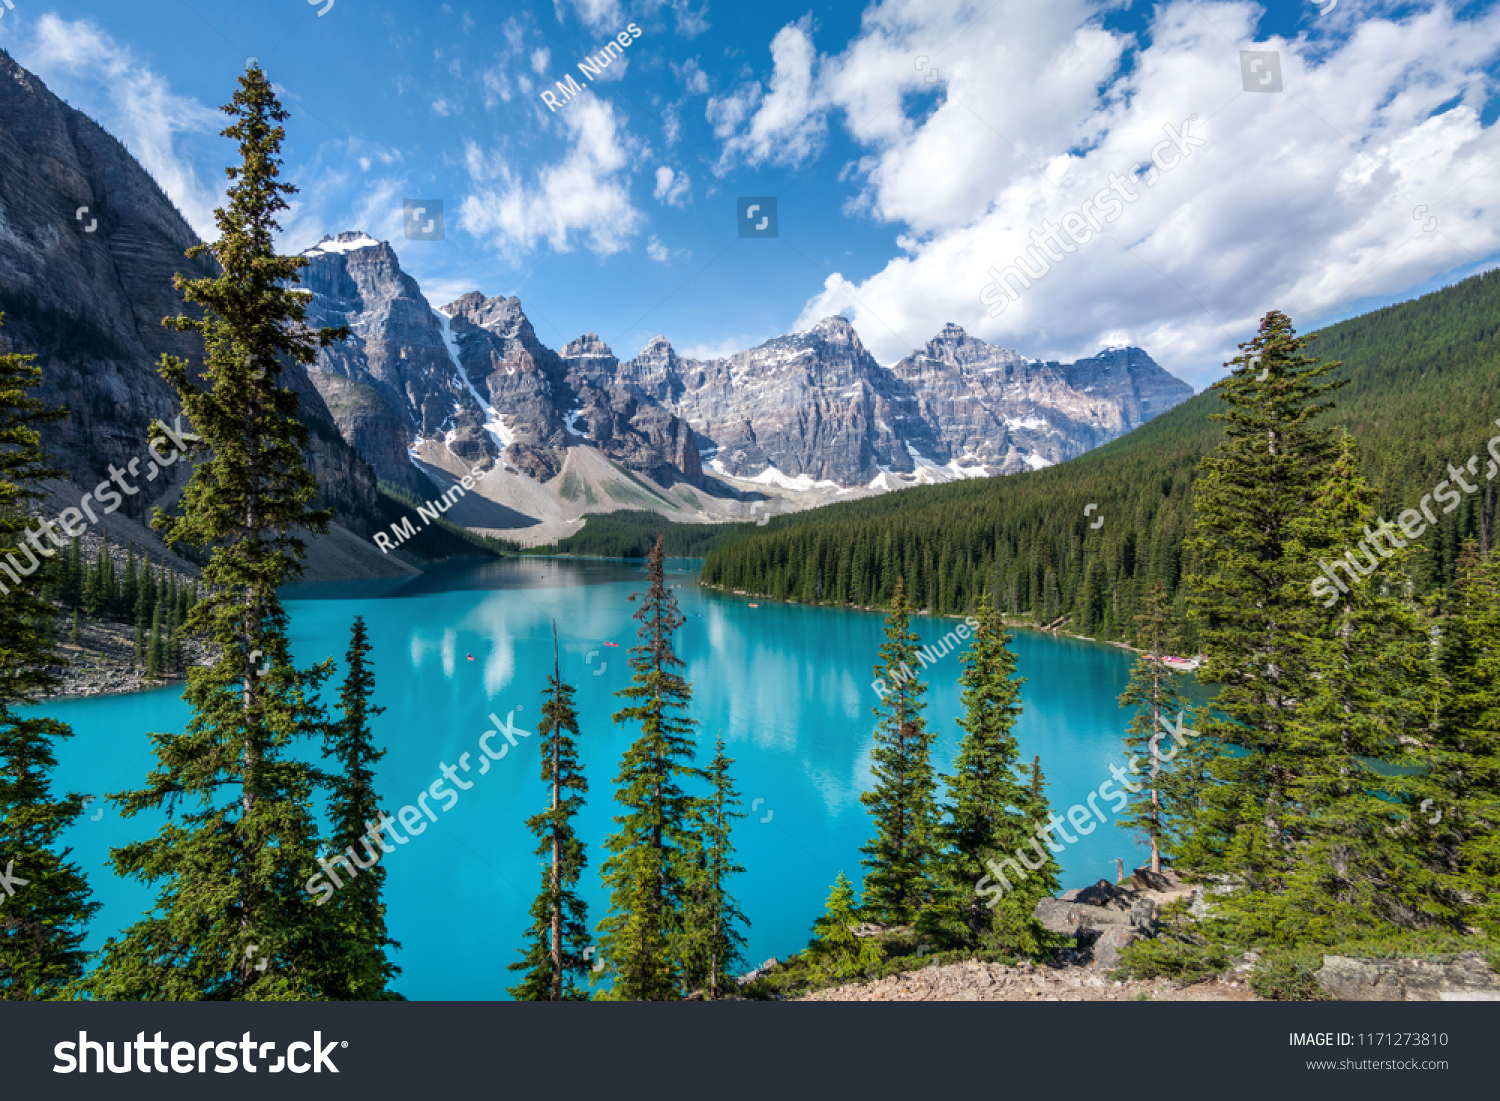 Moraine Lake during summer in Banff National Park, Canadian Rockies, Alberta, Canada.  #1171273810